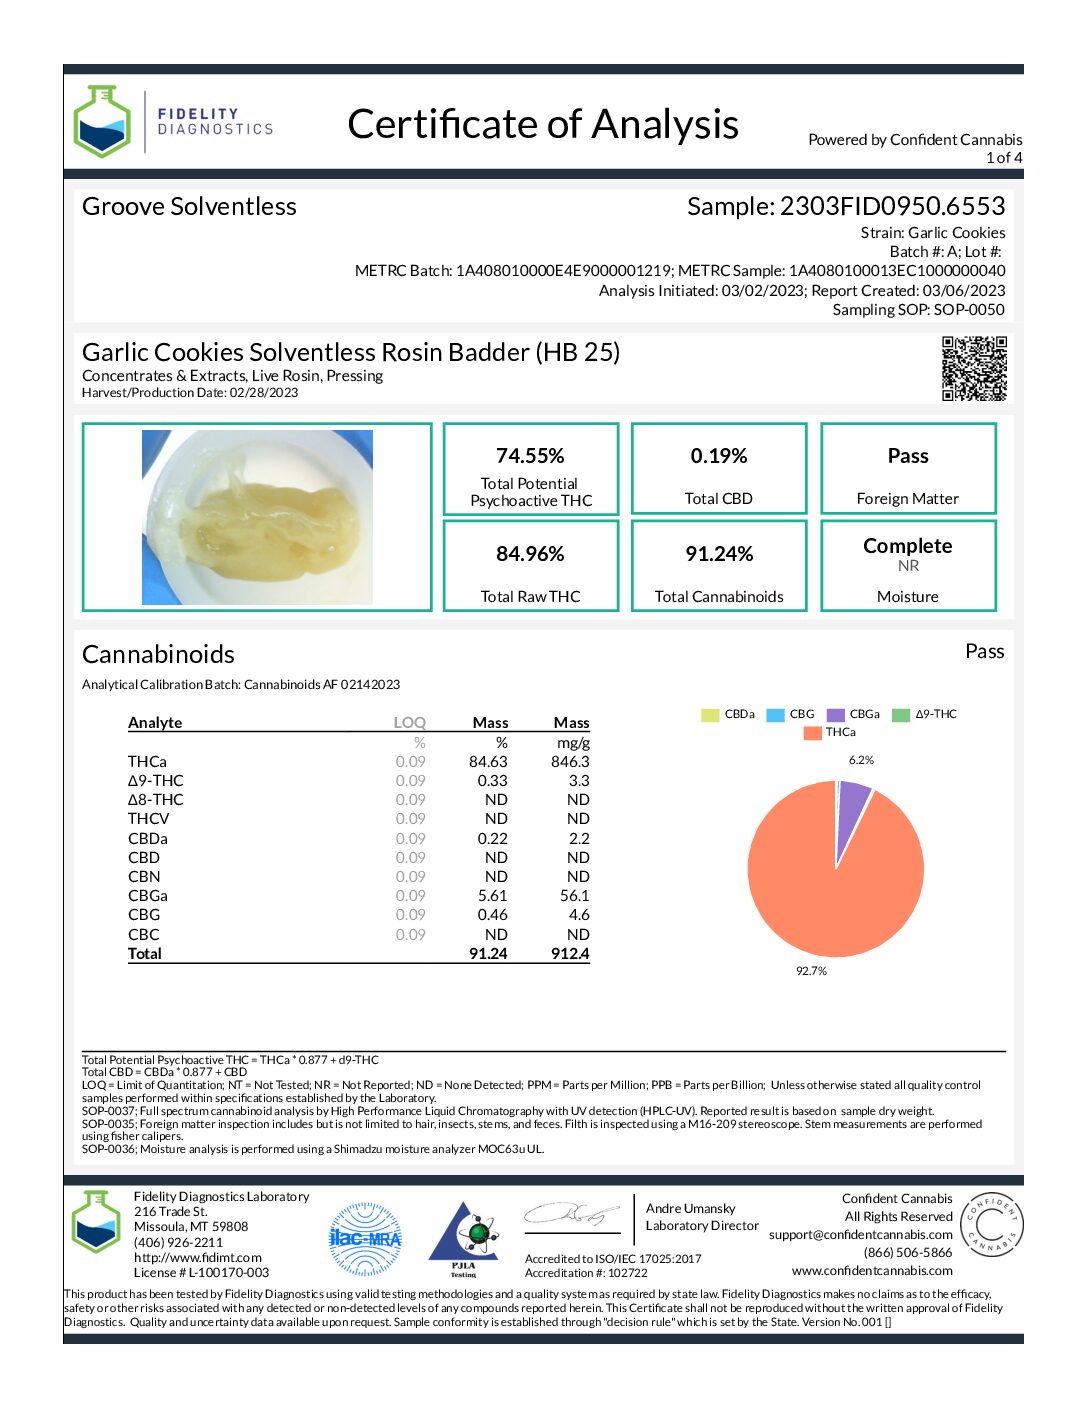 https://groovesolventless.com/wp-content/uploads/2023/03/Garlic-Cookies-Solventless-Rosin-Badder-HB-25-1-pdf.jpg